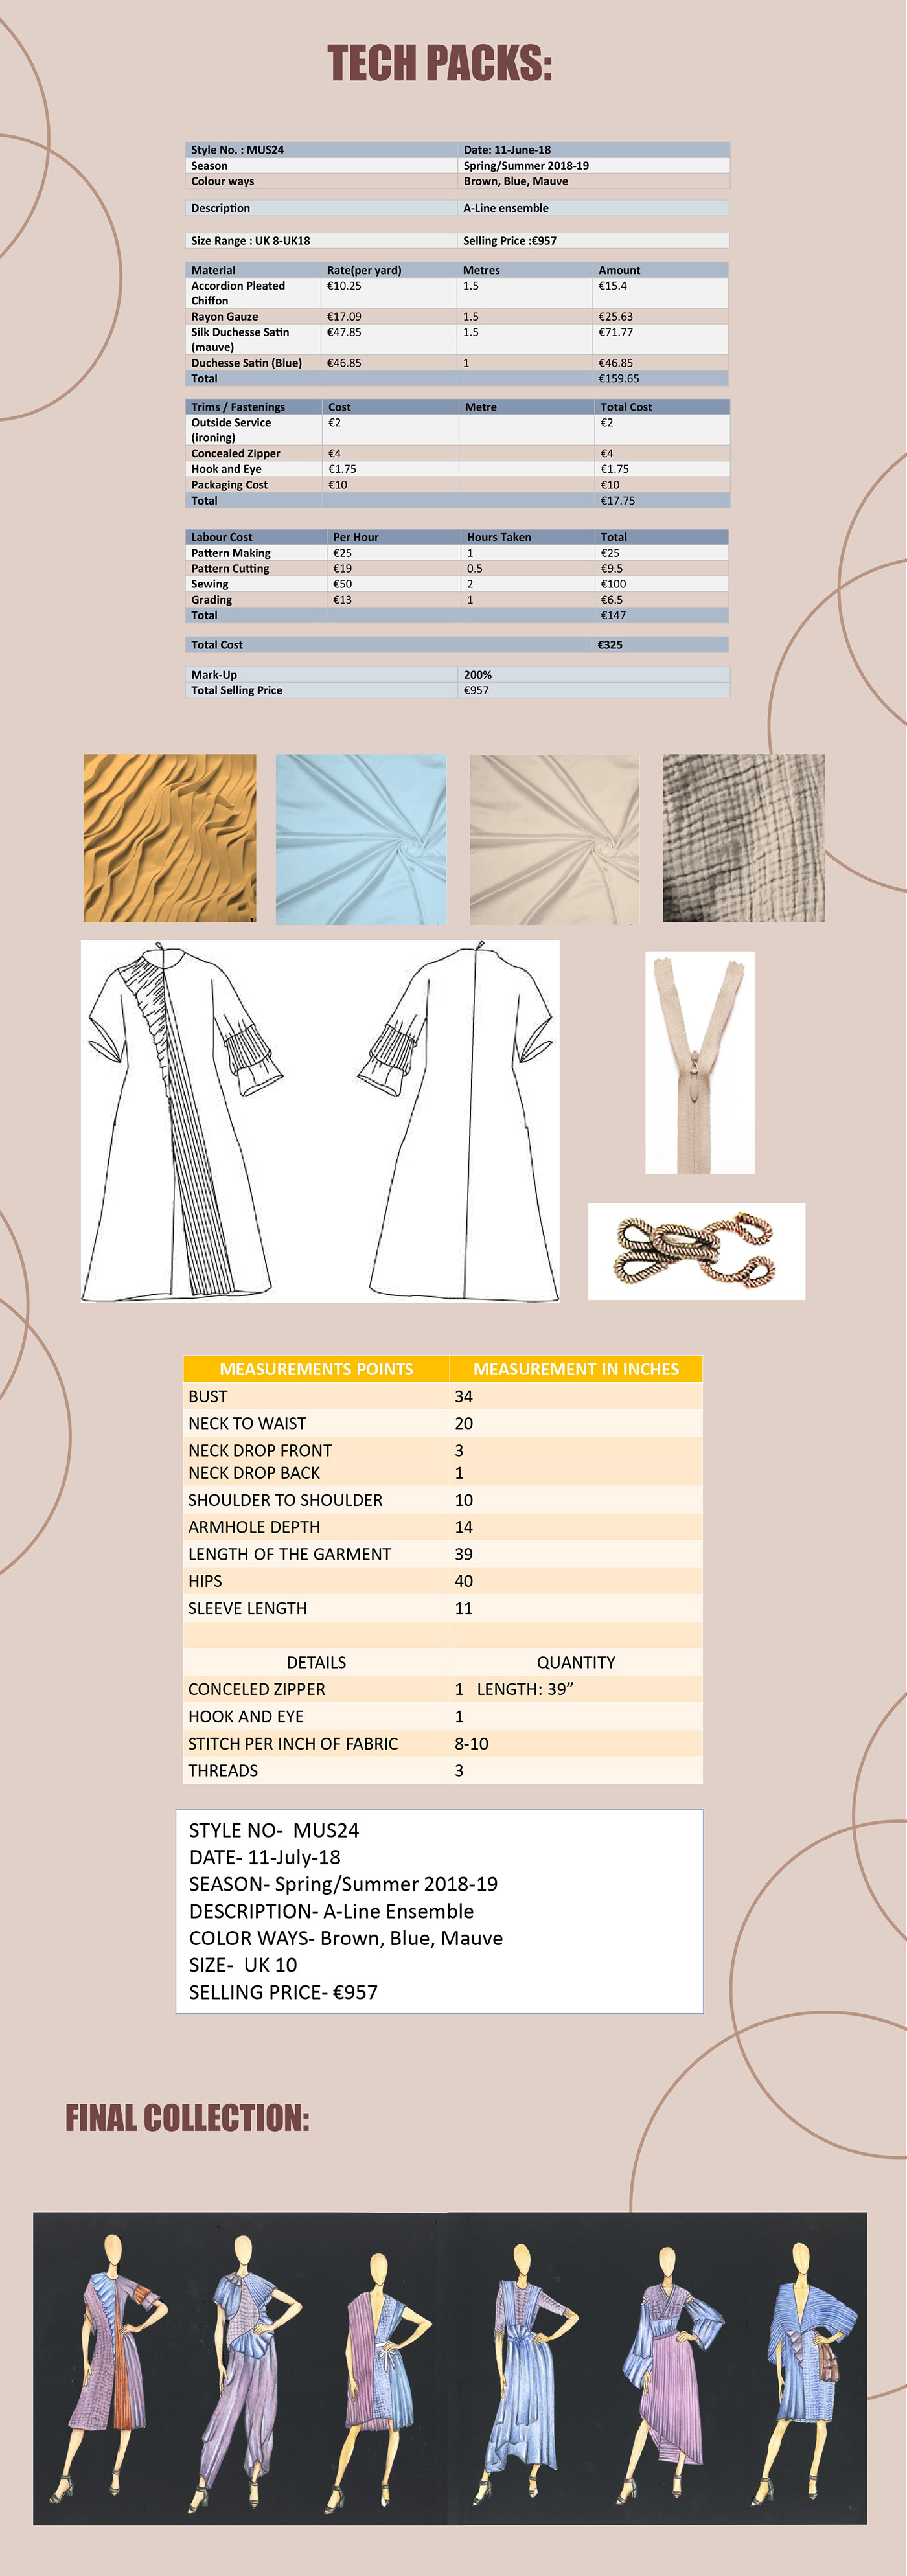 fashion illustration Digital Flats brainstorming Techpacks design process conceptualisatization research